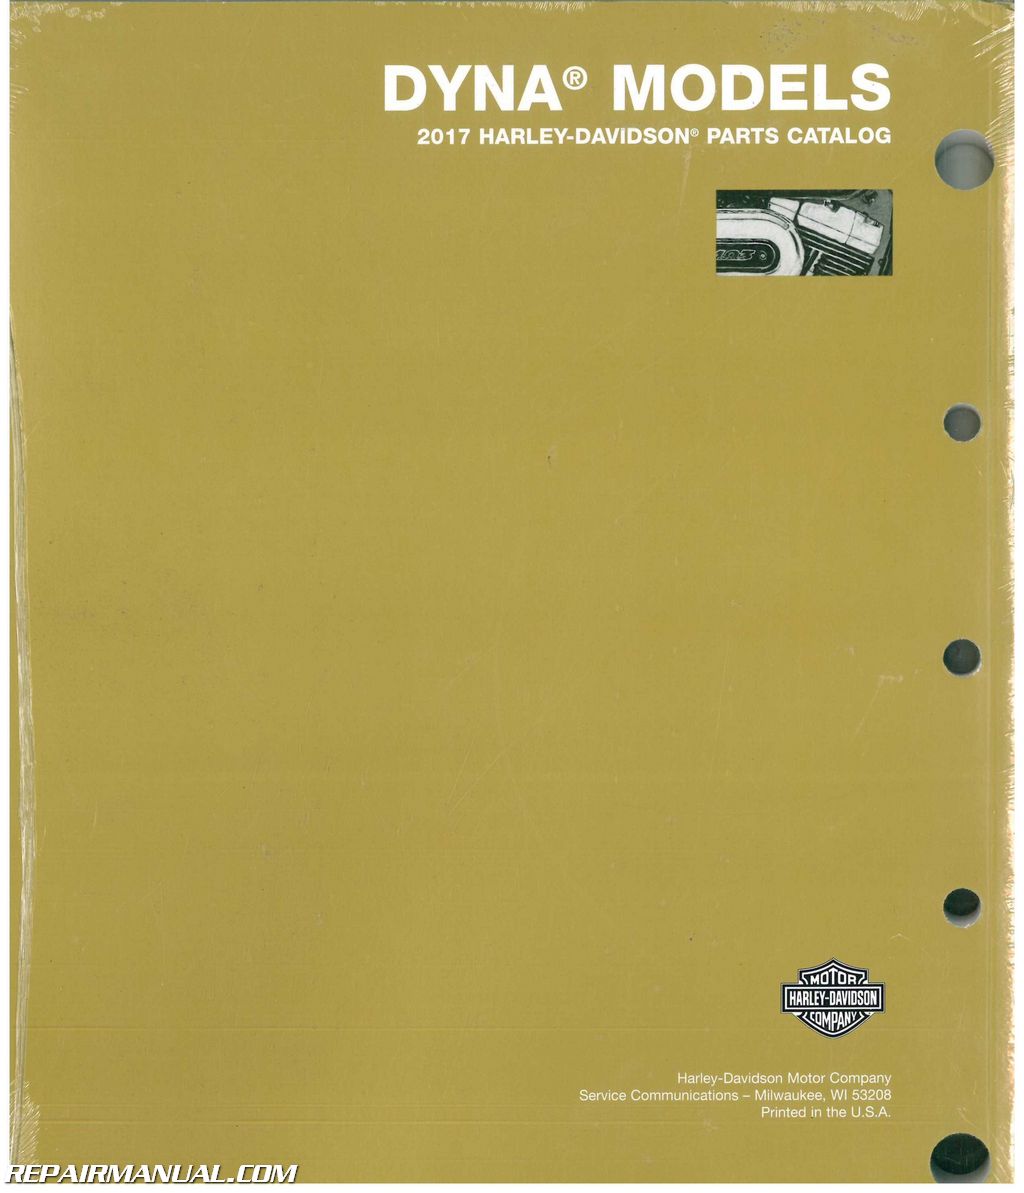 free dyna drive 022 manual programs